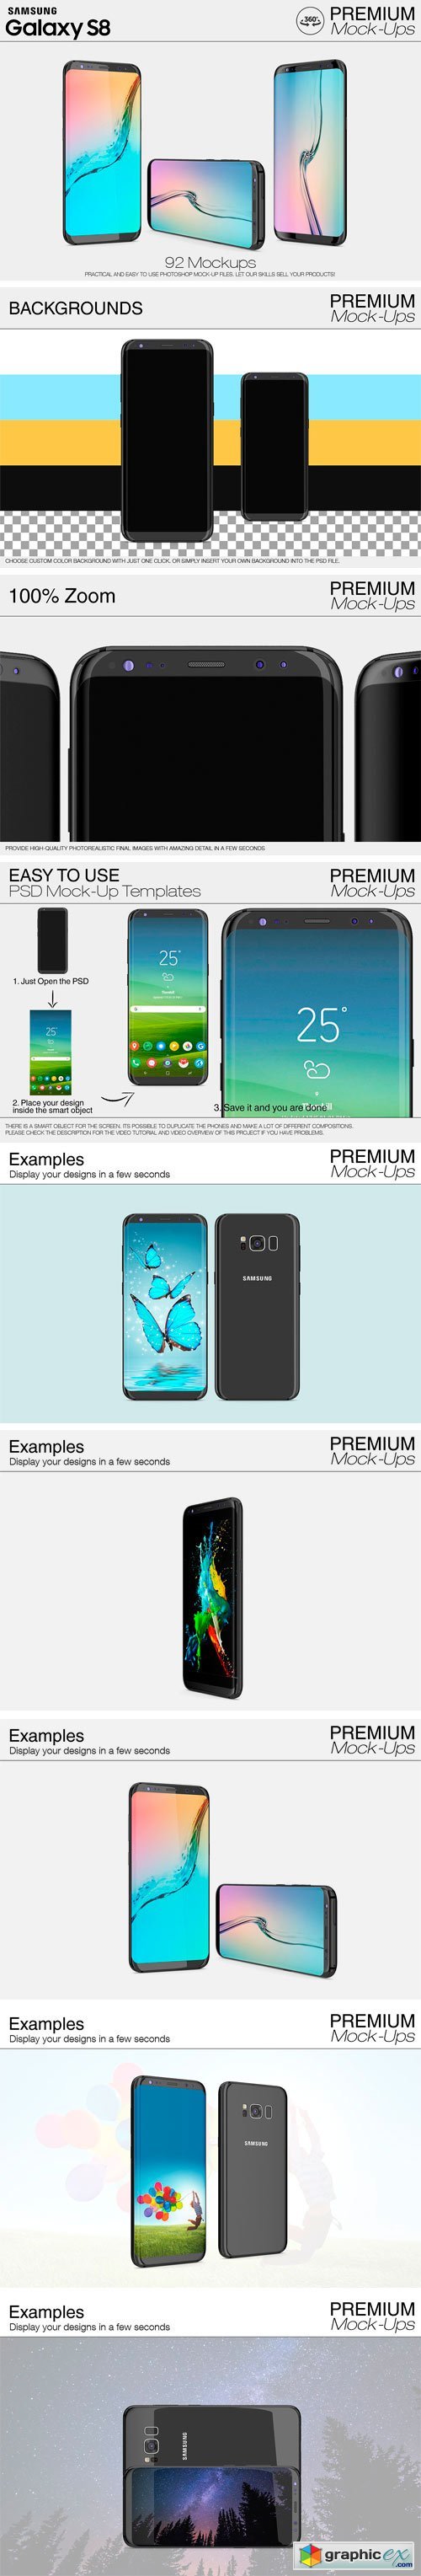 Samsung Galaxy S8 Mockup Pack